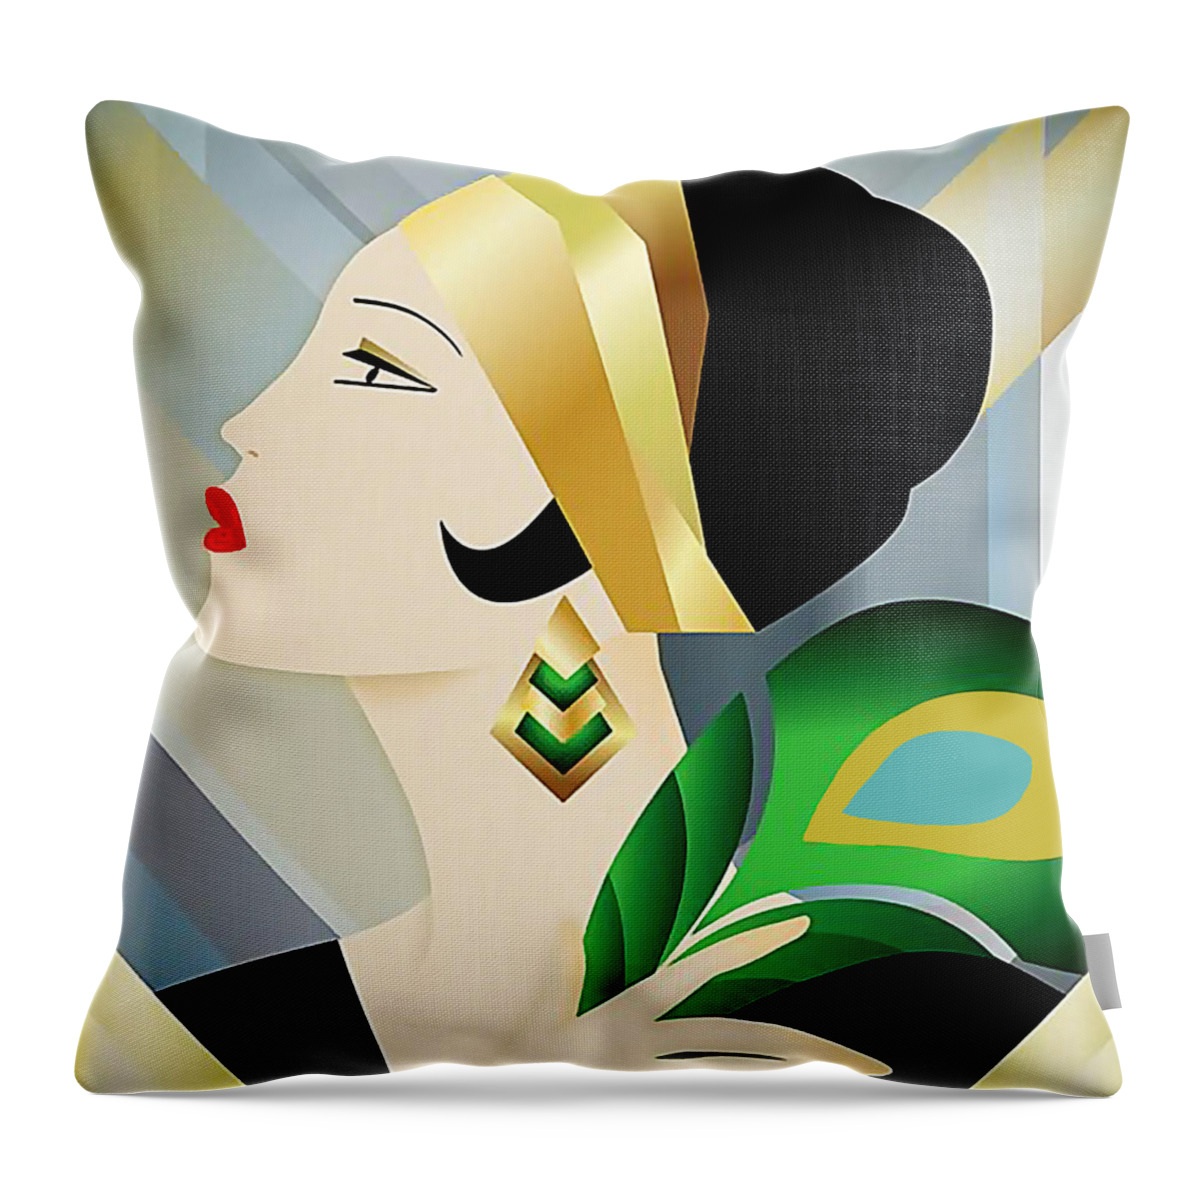 Art Deco Throw Pillow featuring the digital art Roaring 20s Flapper by Chuck Staley